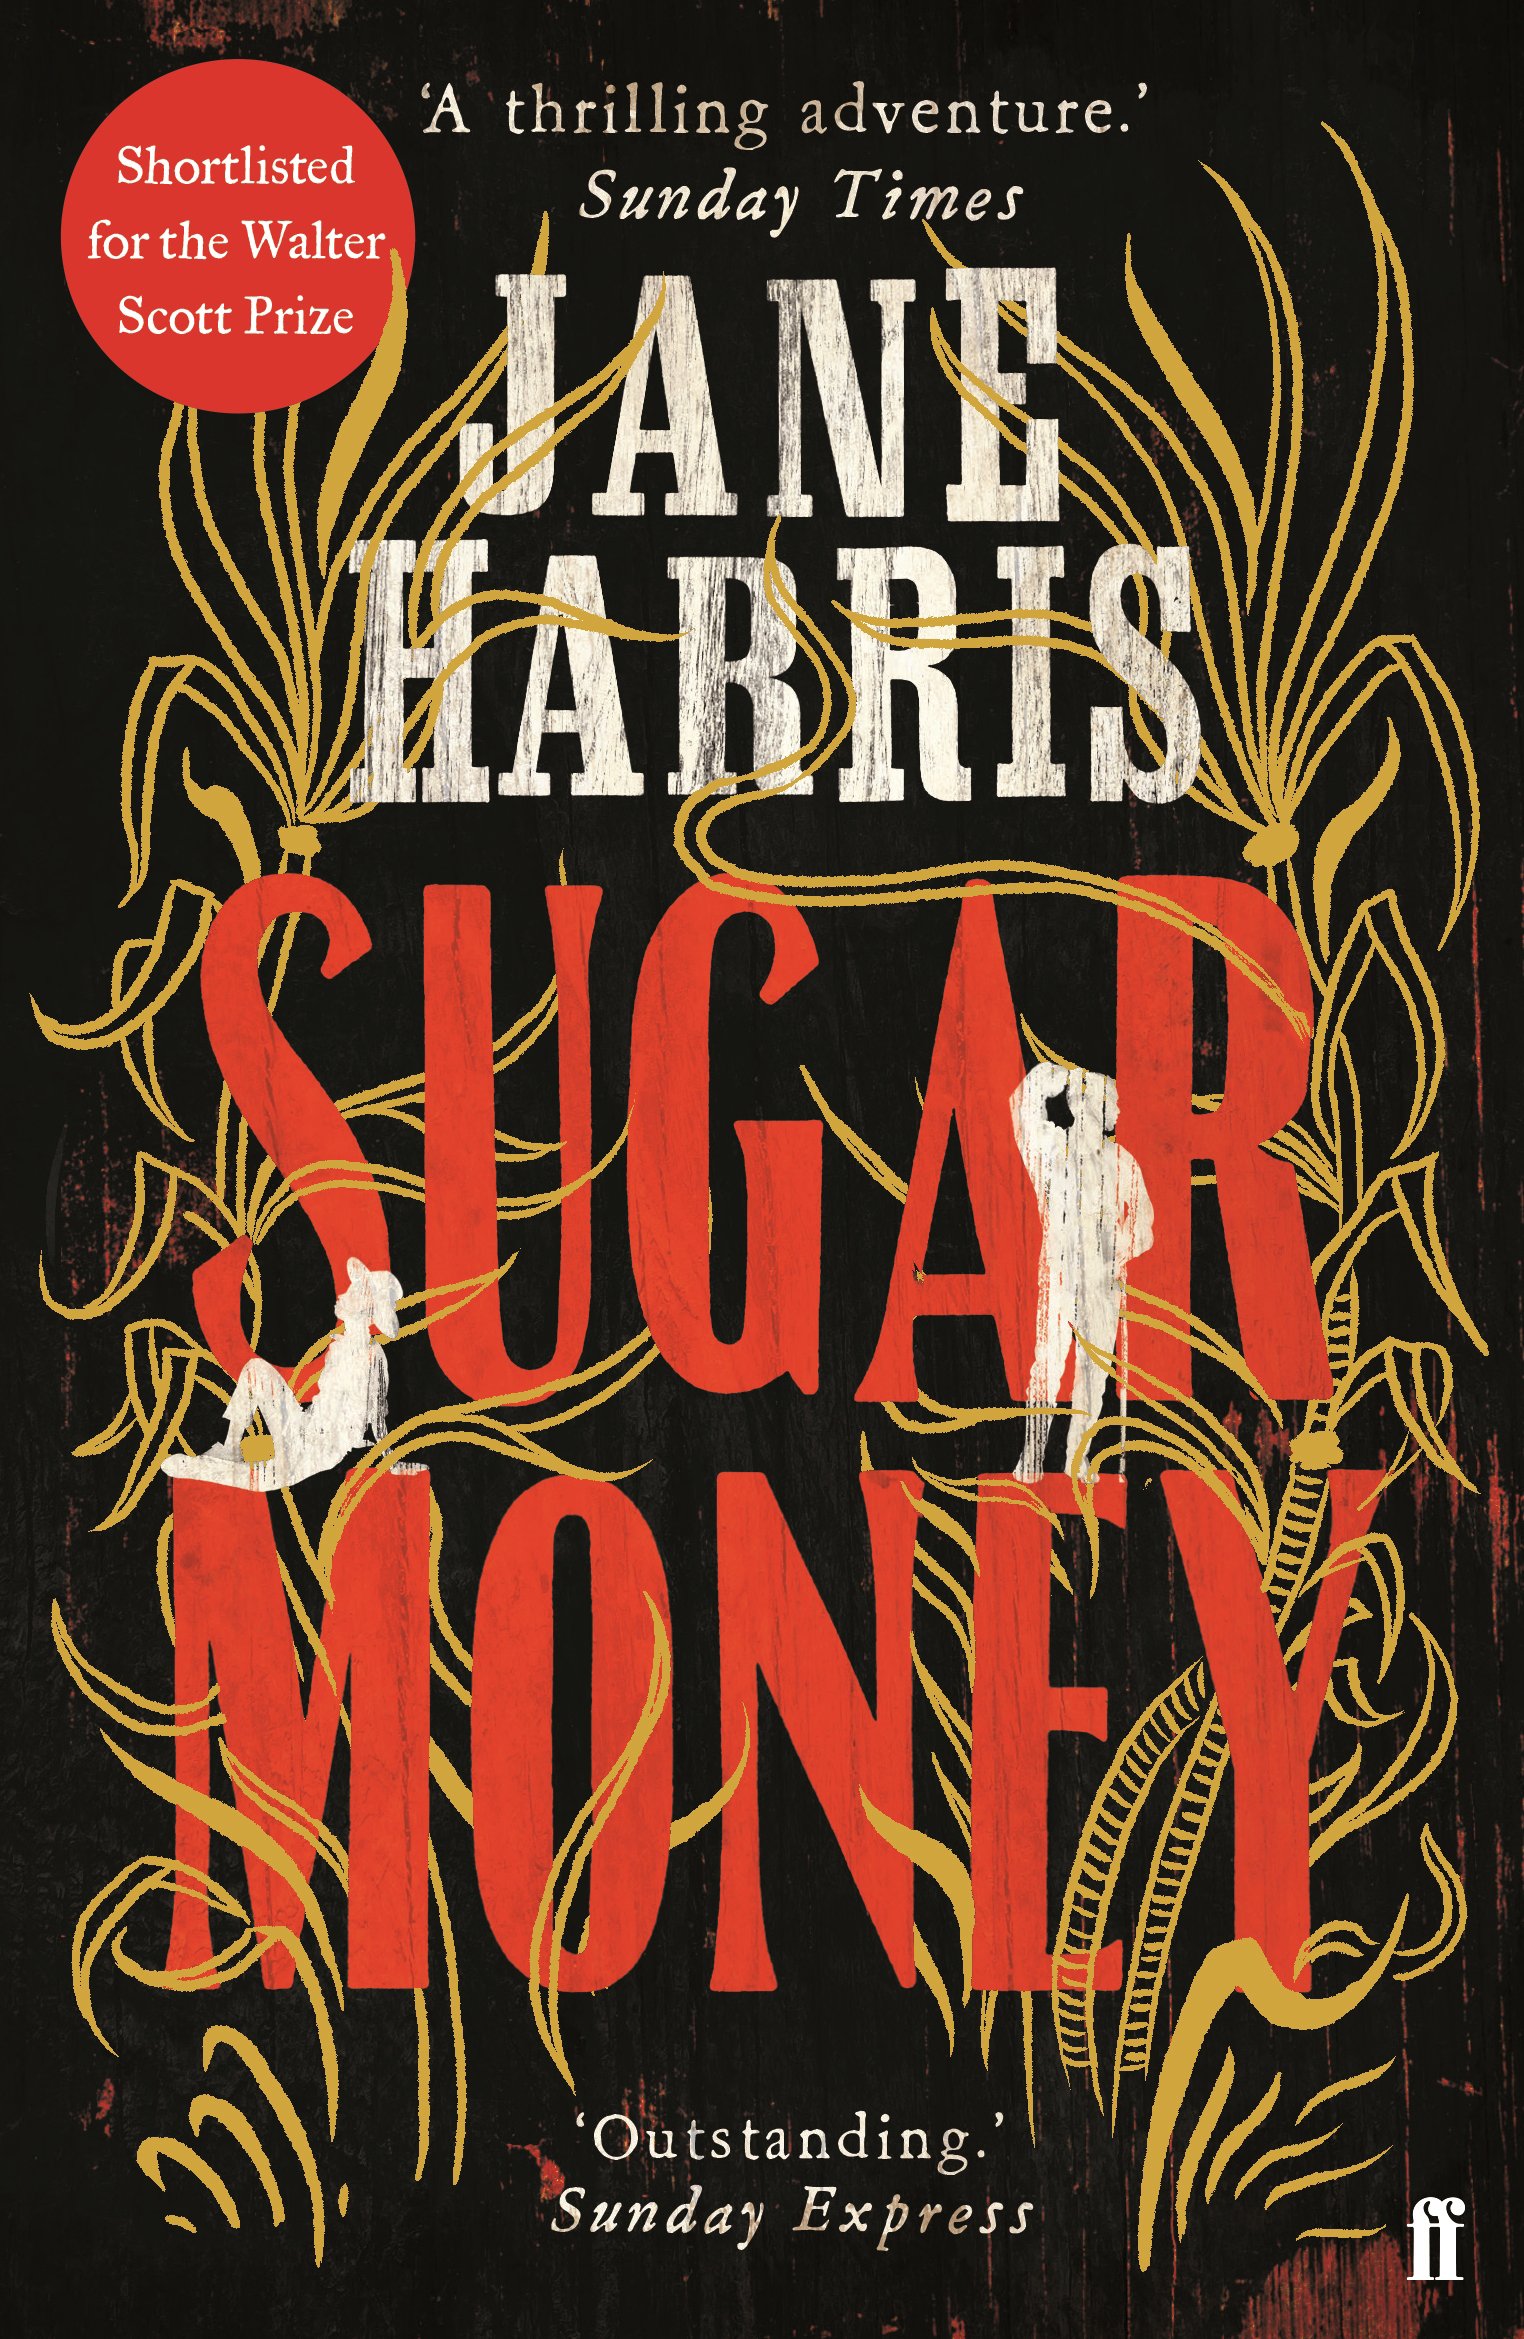 Sugar Money | Jane Harris